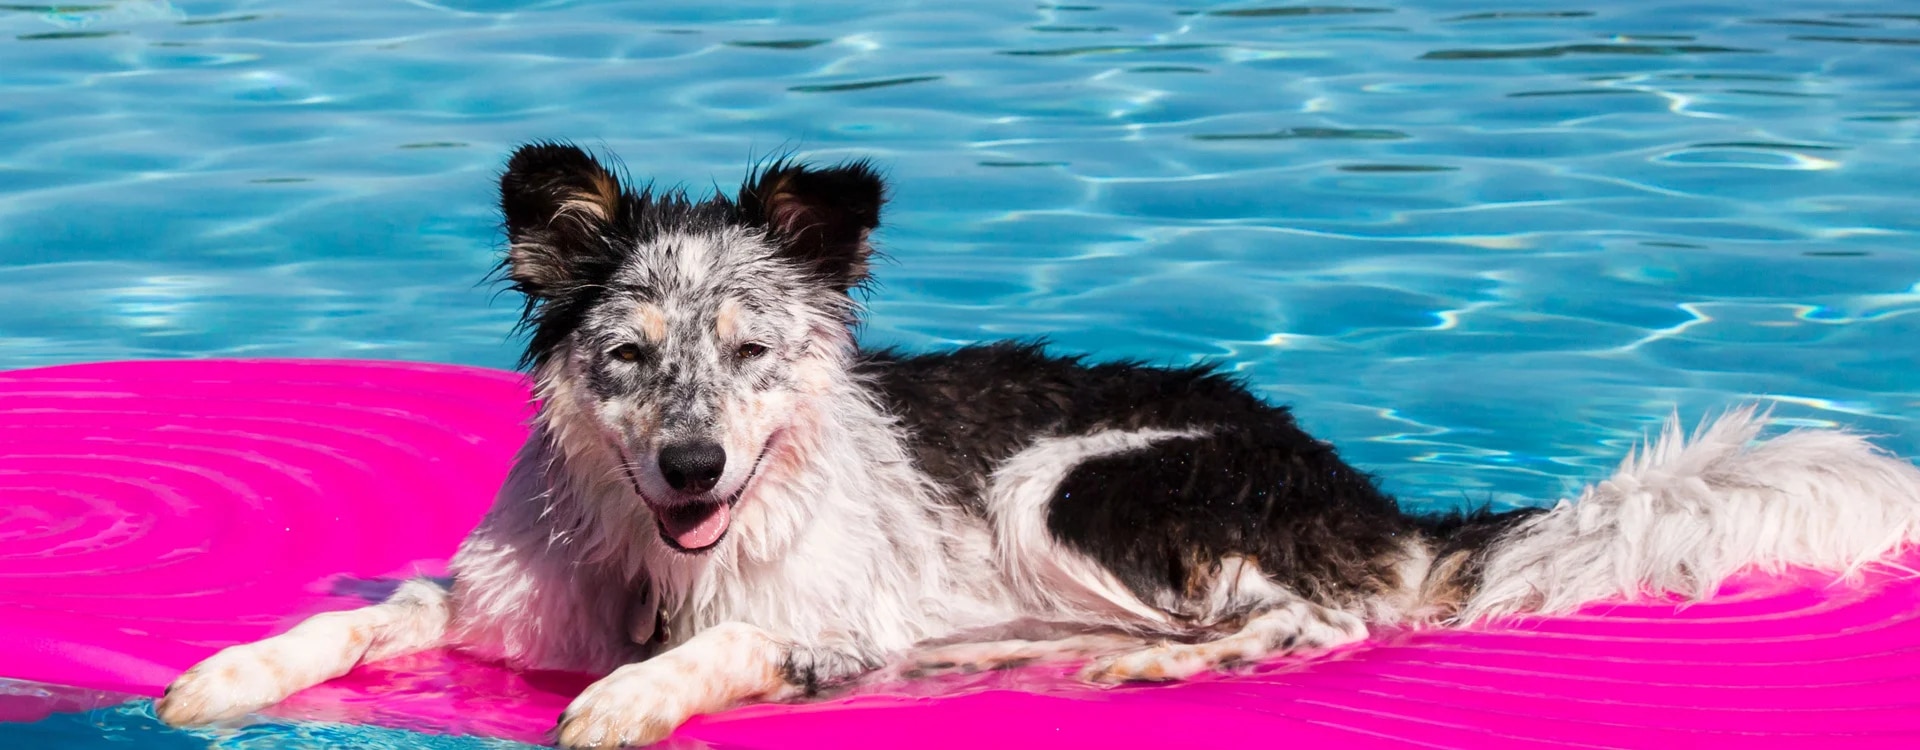 Dog In Pool